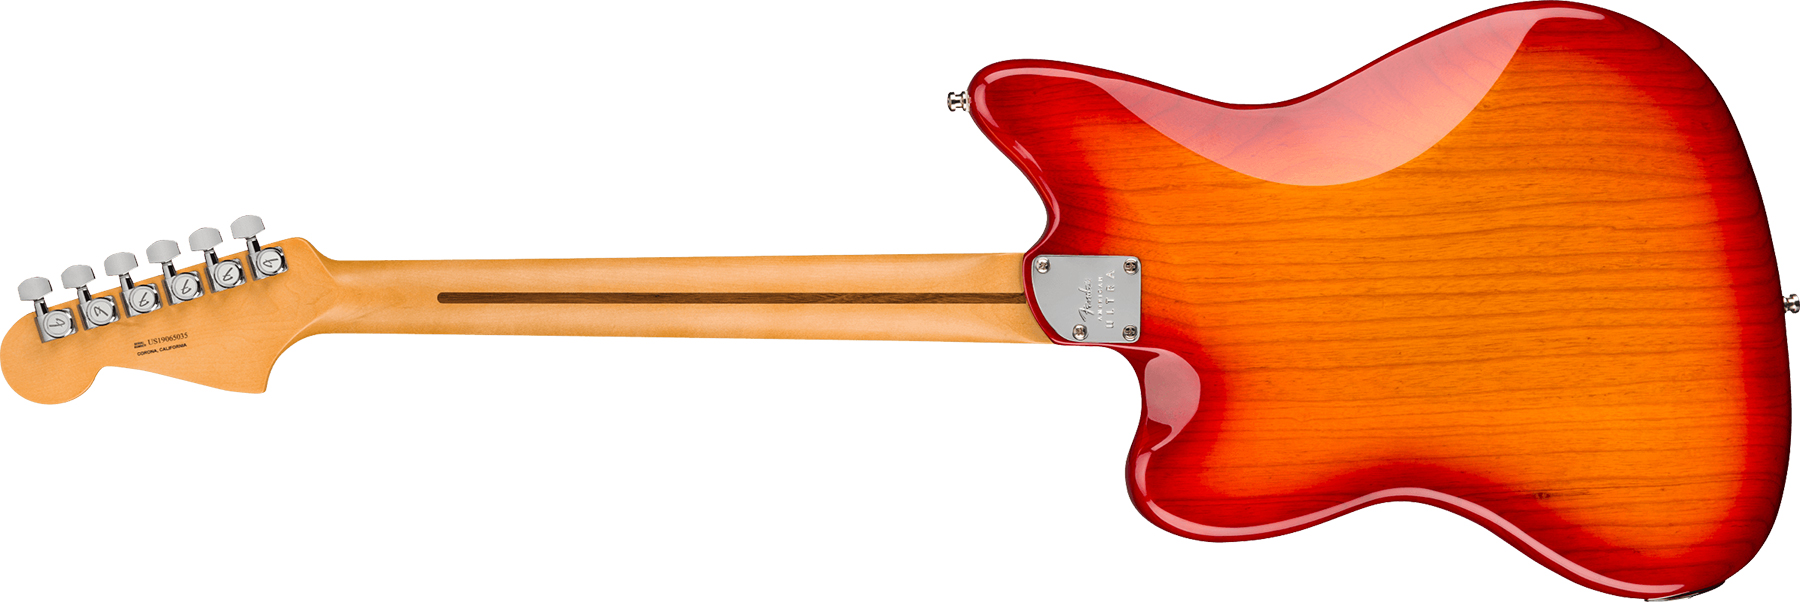 Fender Jazzmaster American Ultra 2019 Usa Mn - Plasma Red Burst - Retro-rock elektrische gitaar - Variation 1